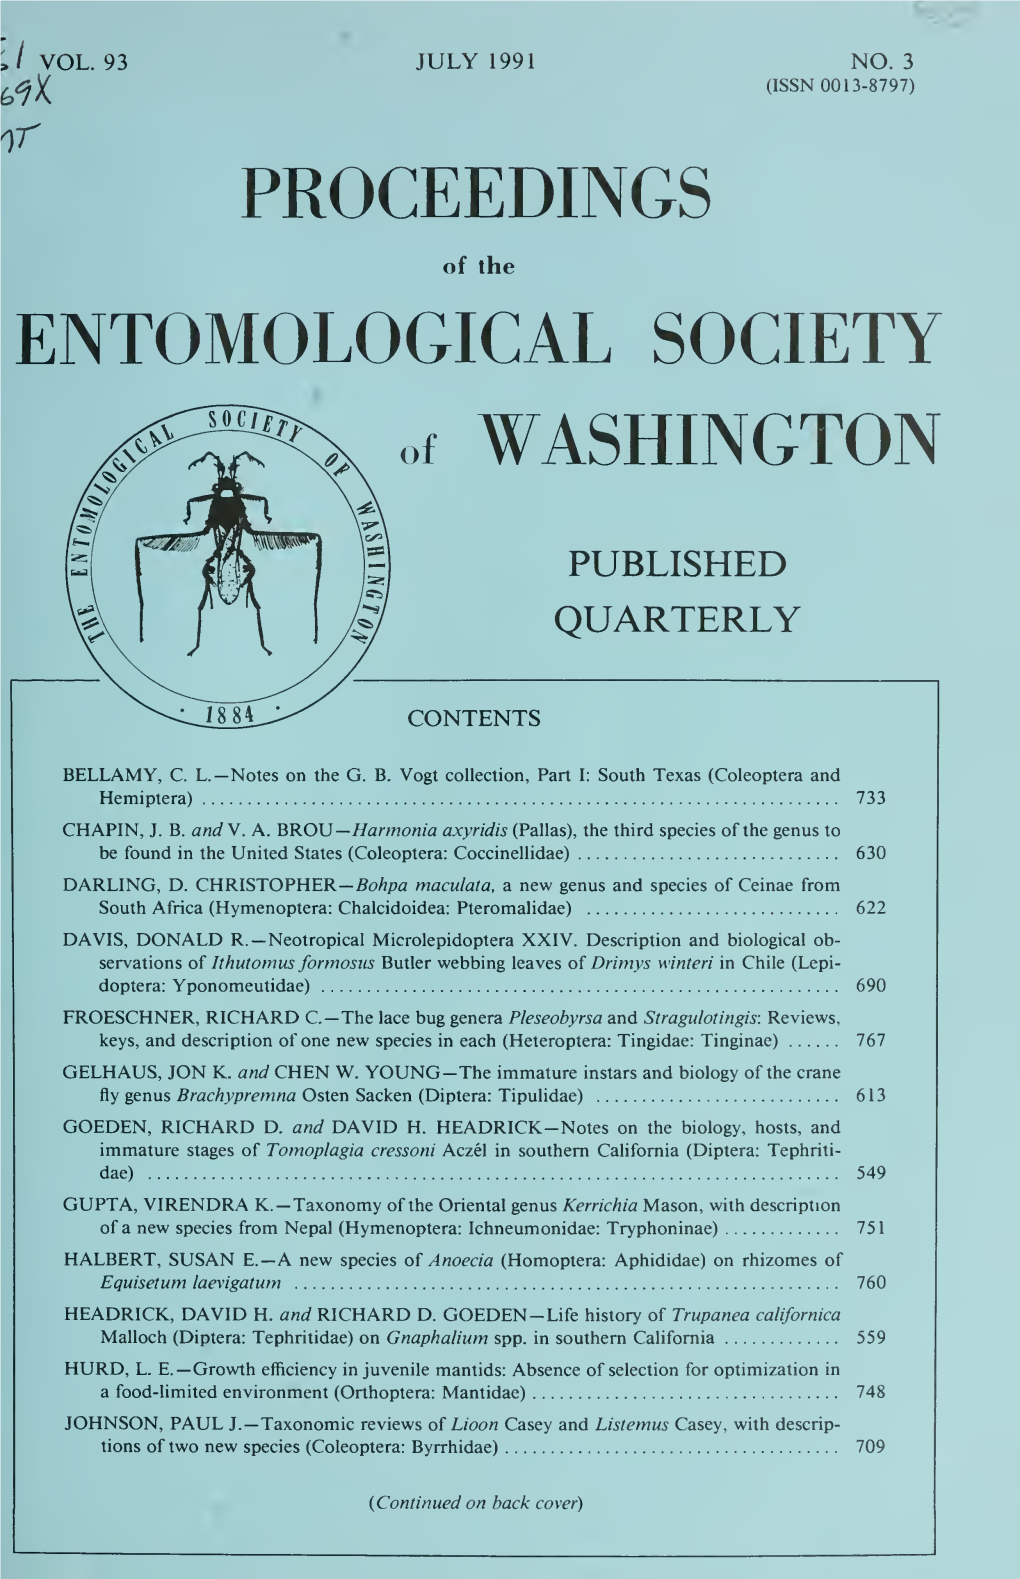 Proceedings of the Entomological Society of Washington for One Year